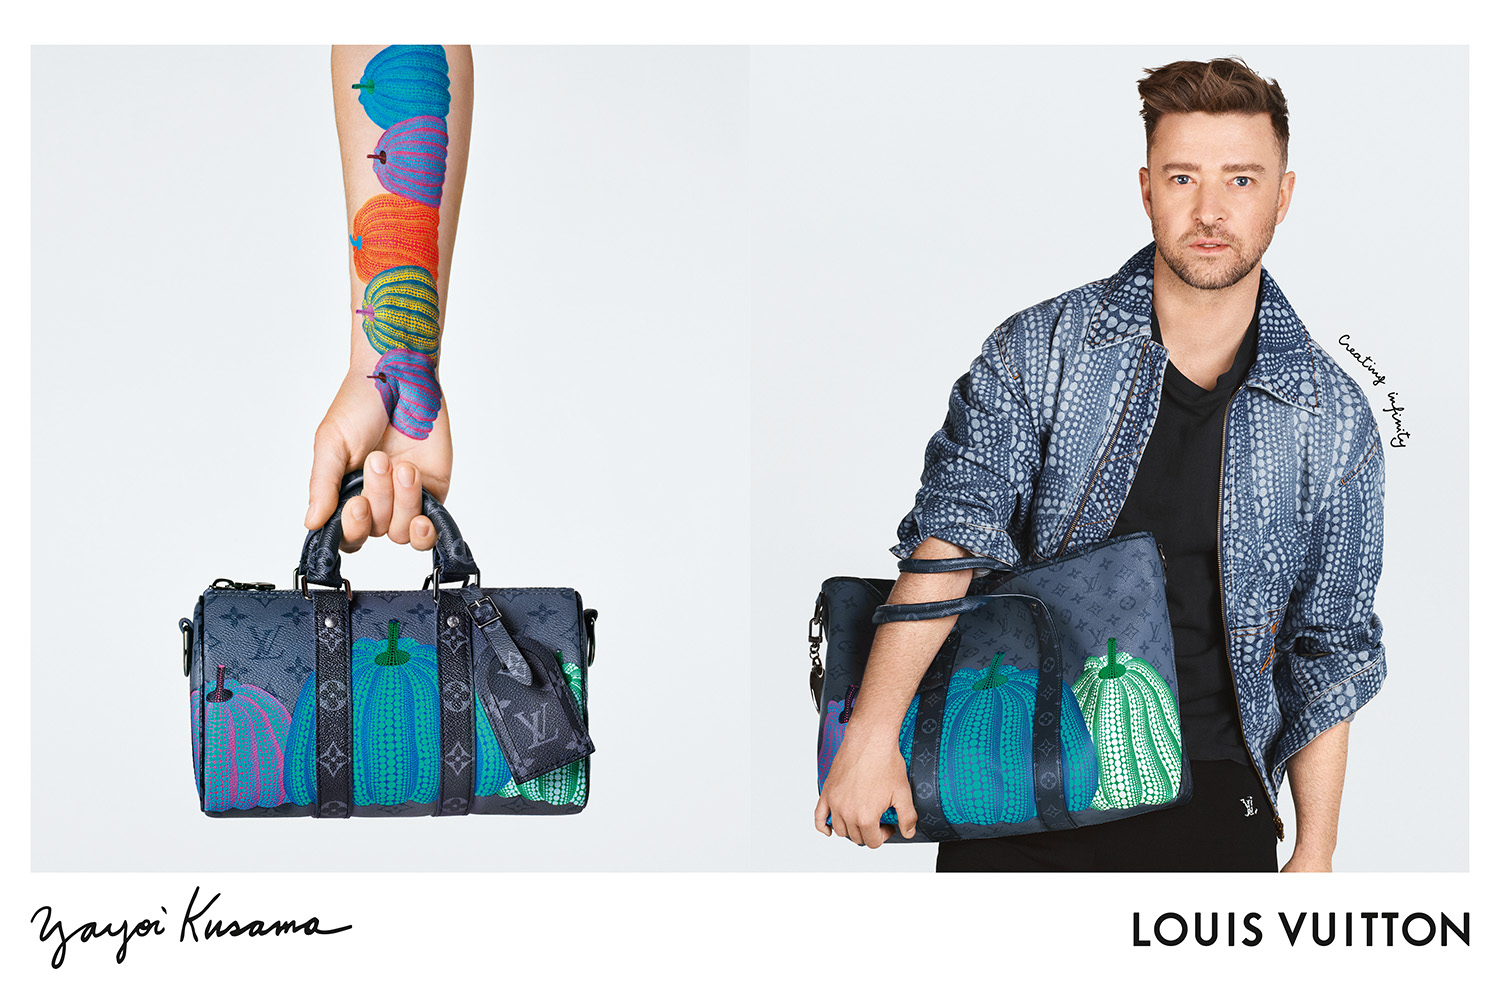 Yayoi Kusama's Infinite Dots Bounce To Louis Vuitton